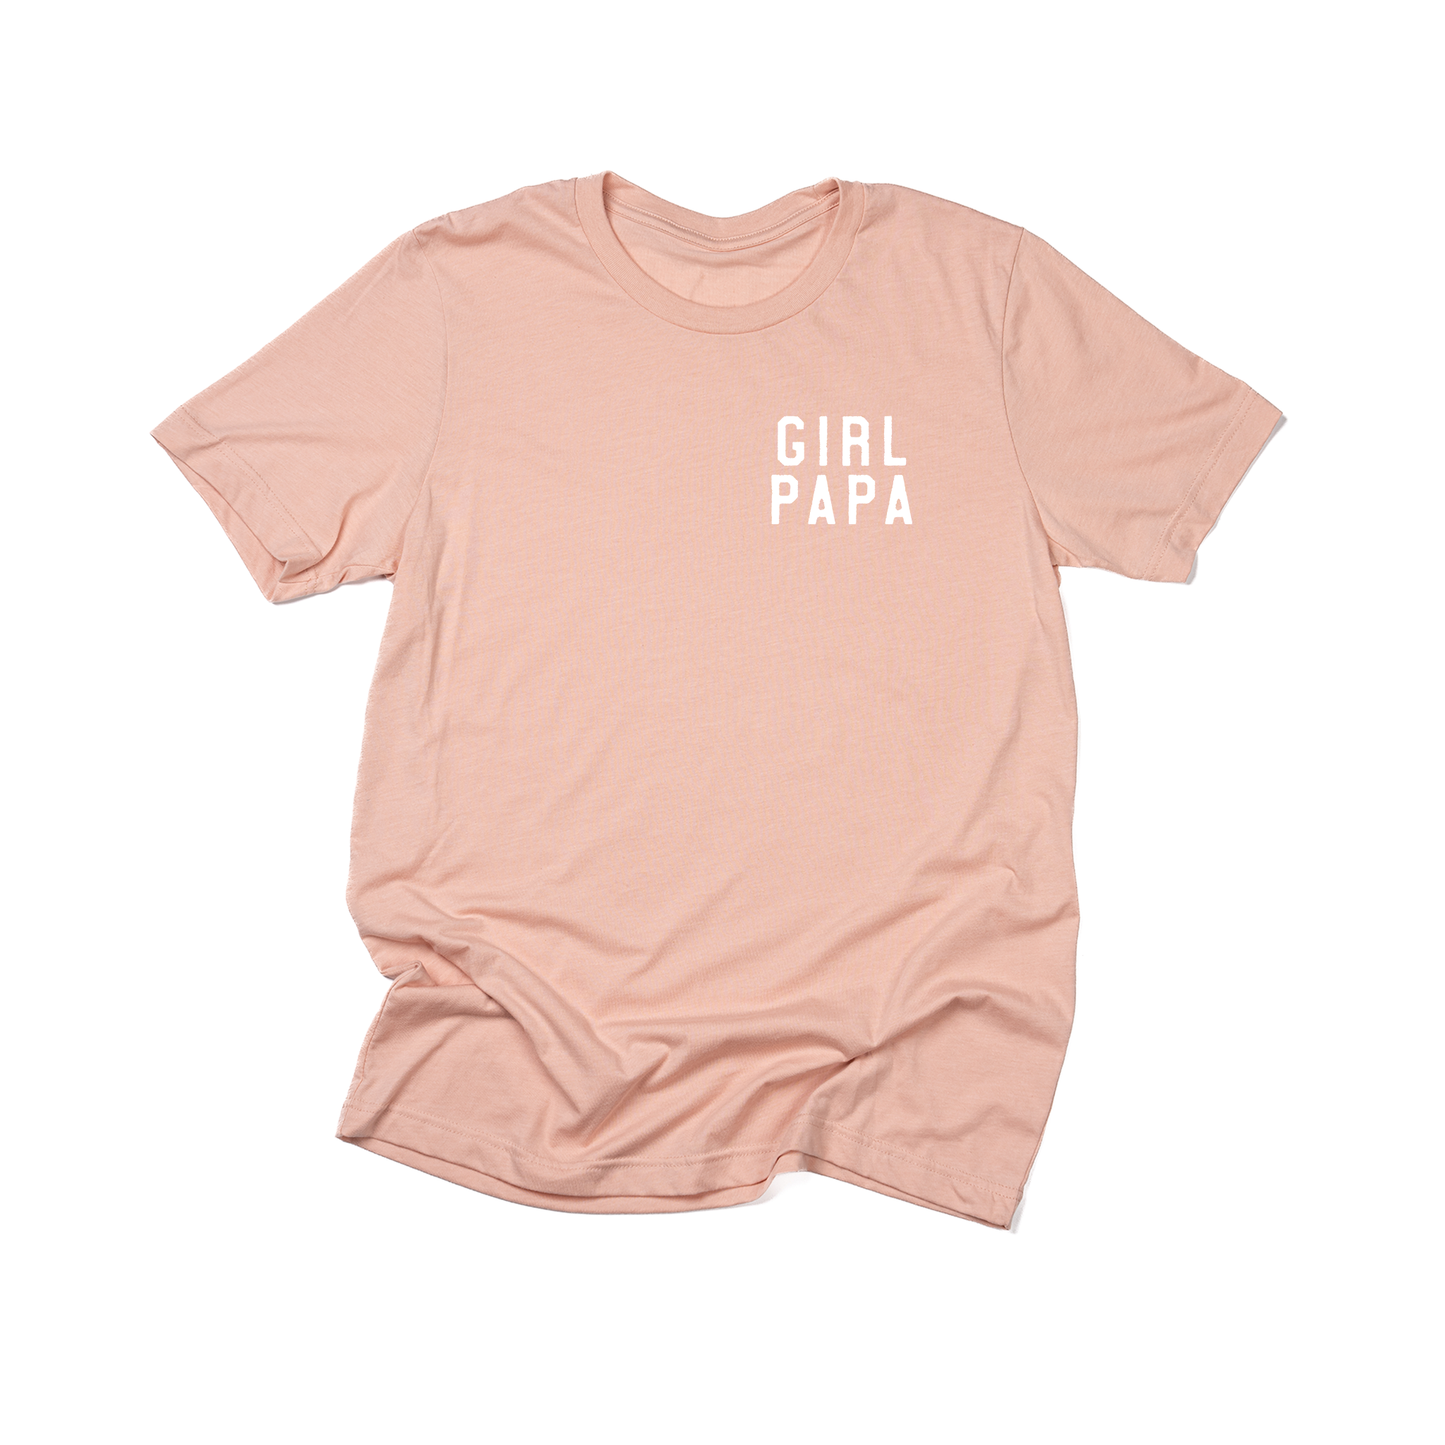 Girl Papa (Pocket, White) - Tee (Peach)